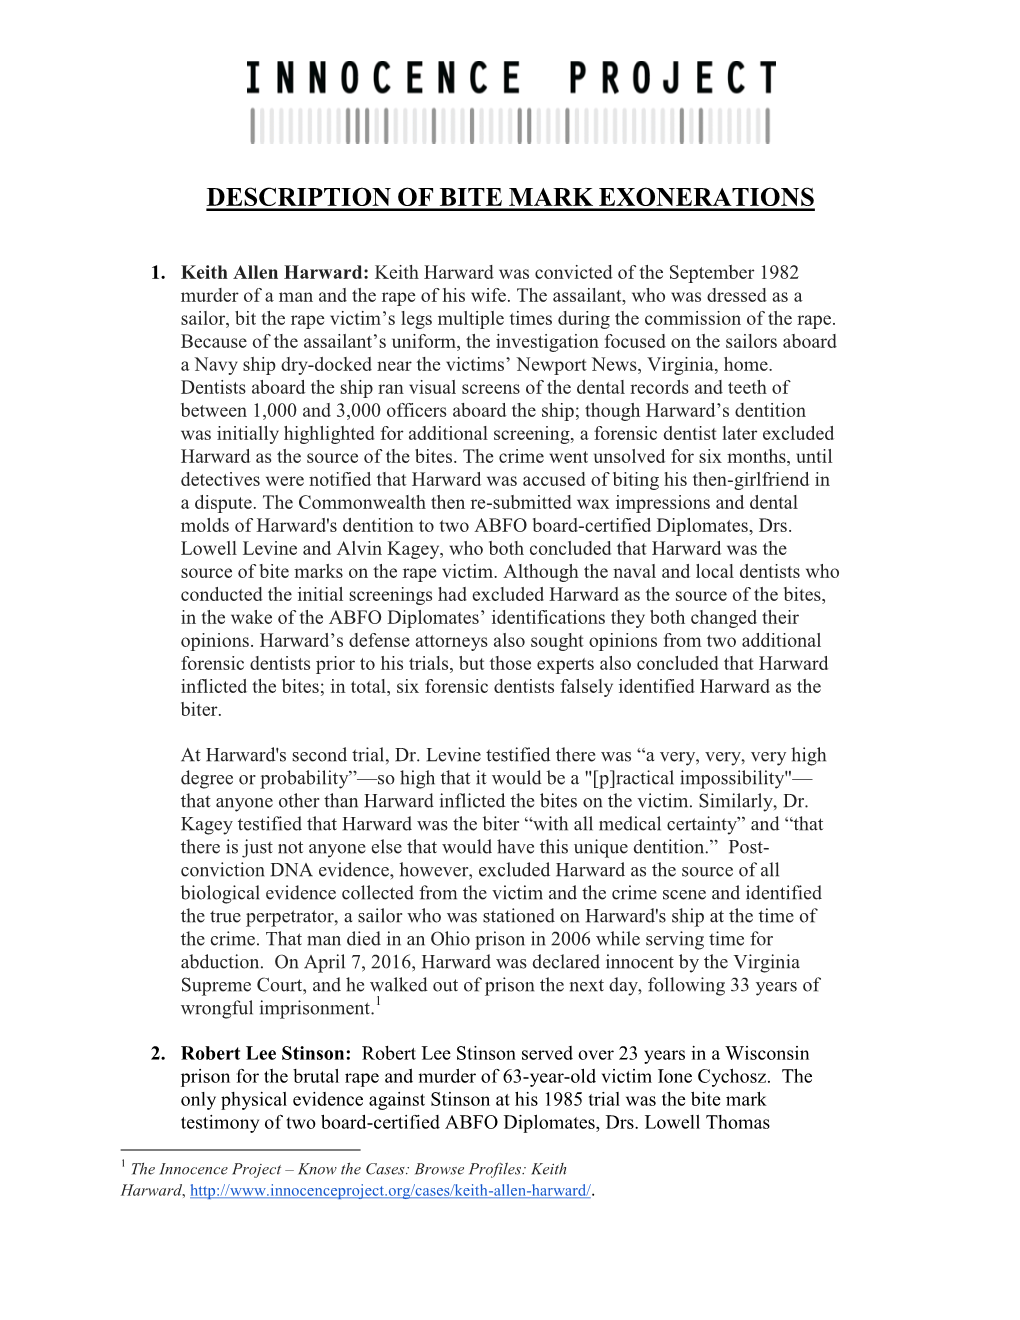 Description of Bite Mark Exonerations